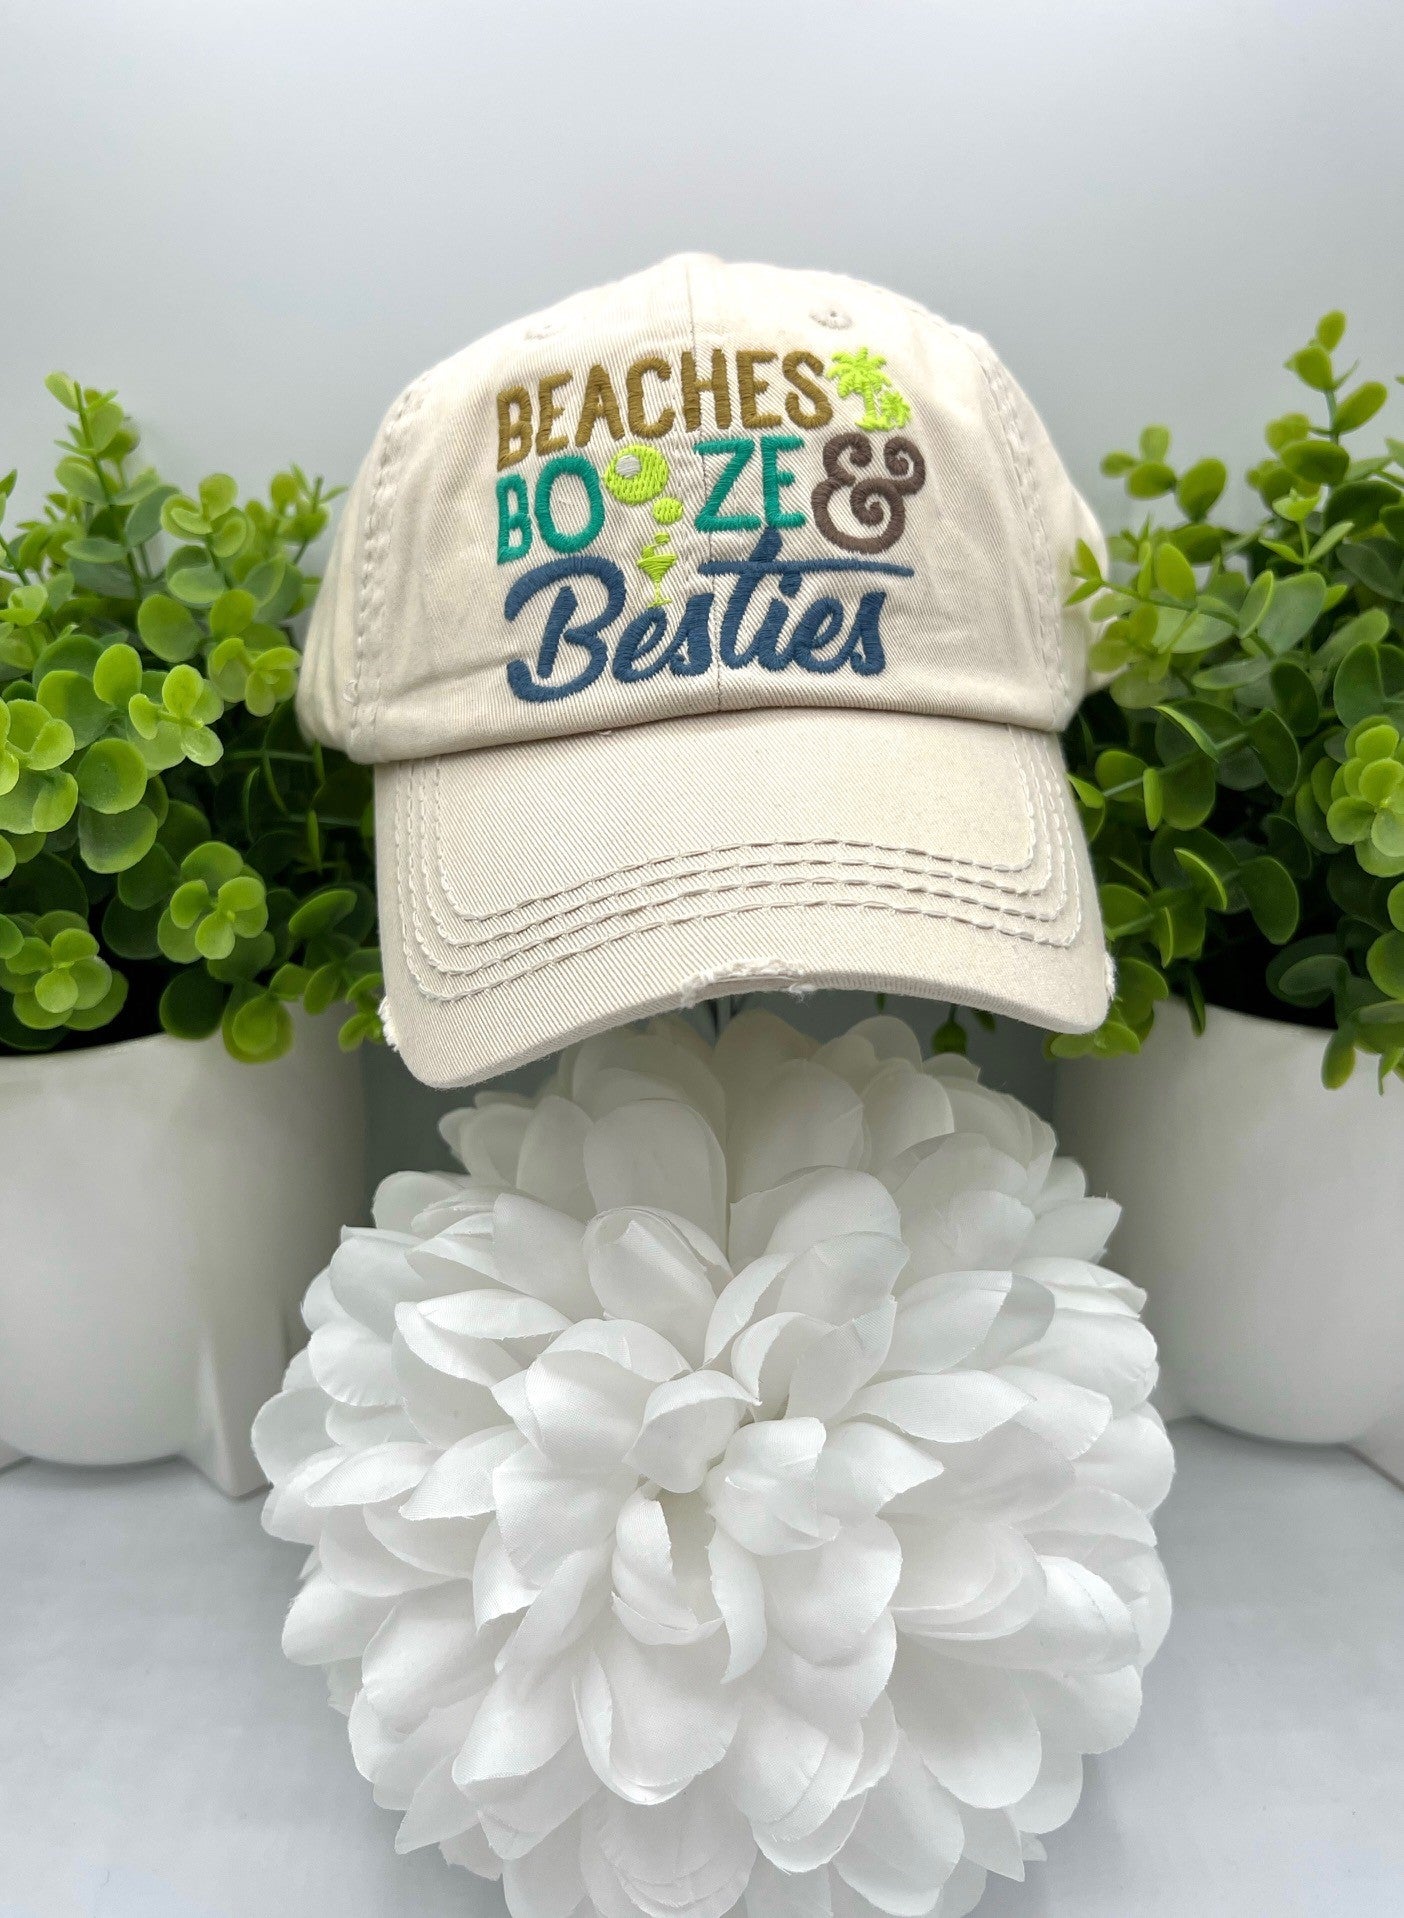 Beaches Booze & Besties Baseball Cap